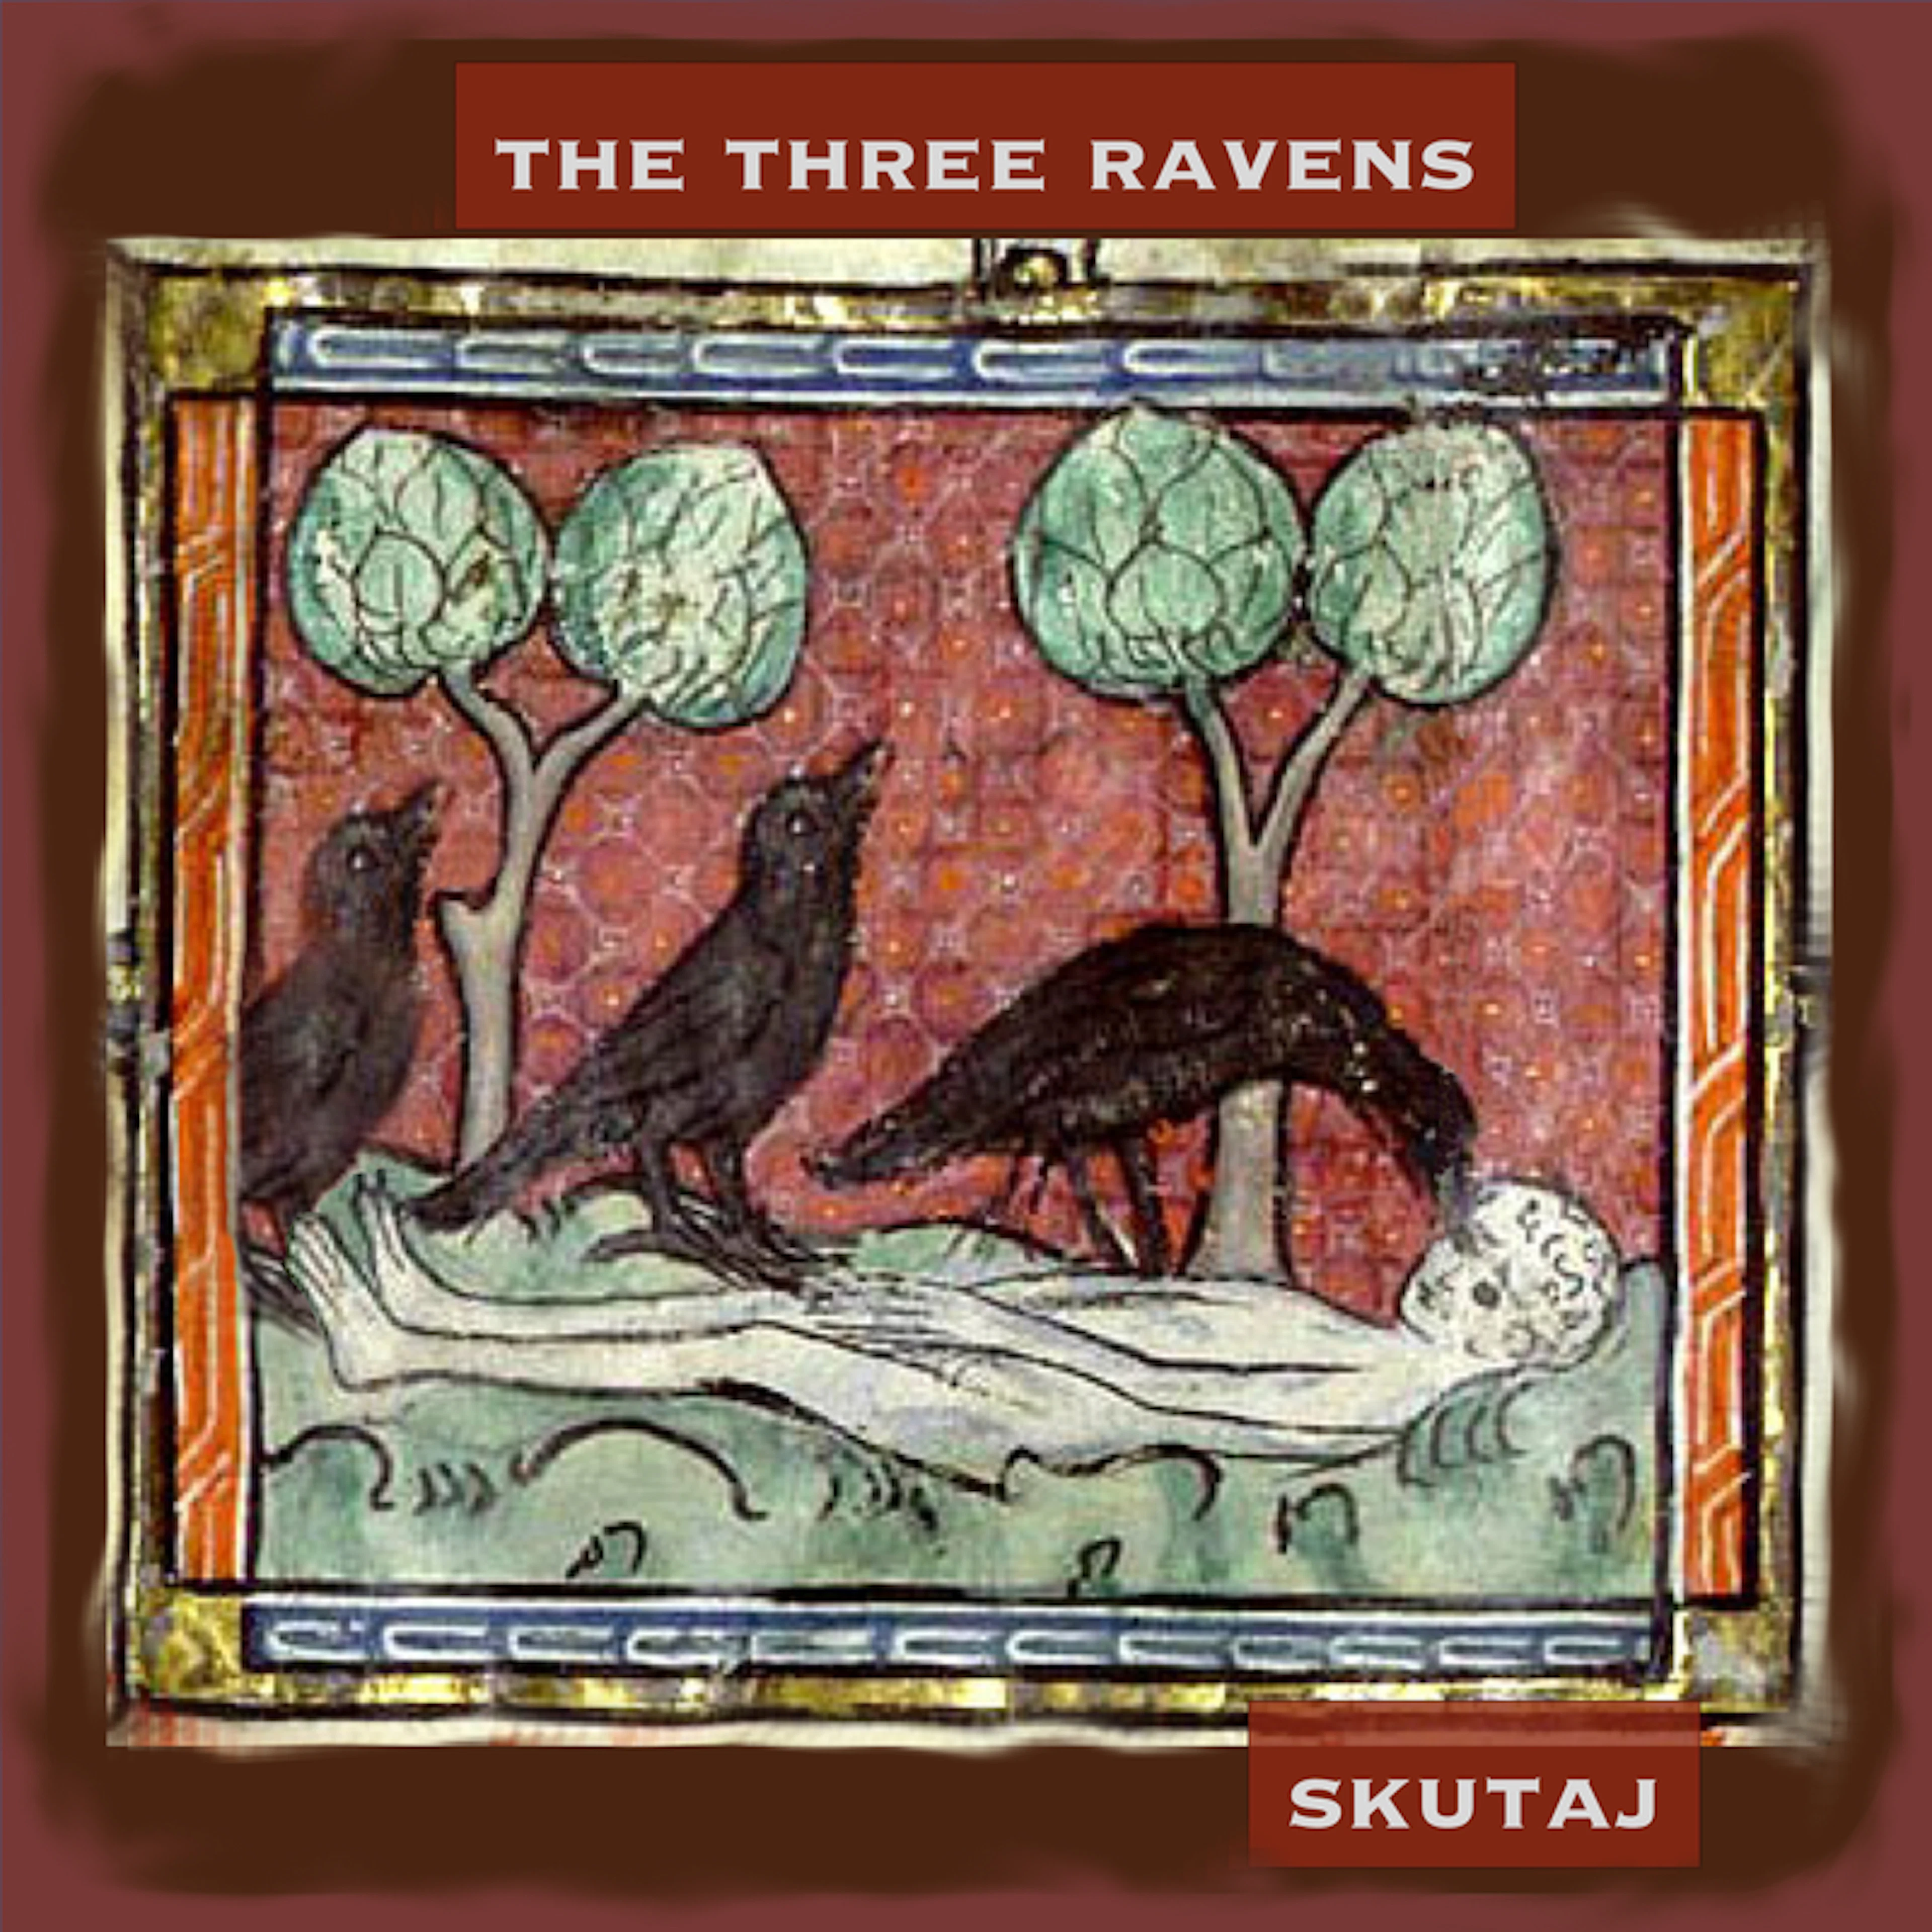 The Three Ravens audio track